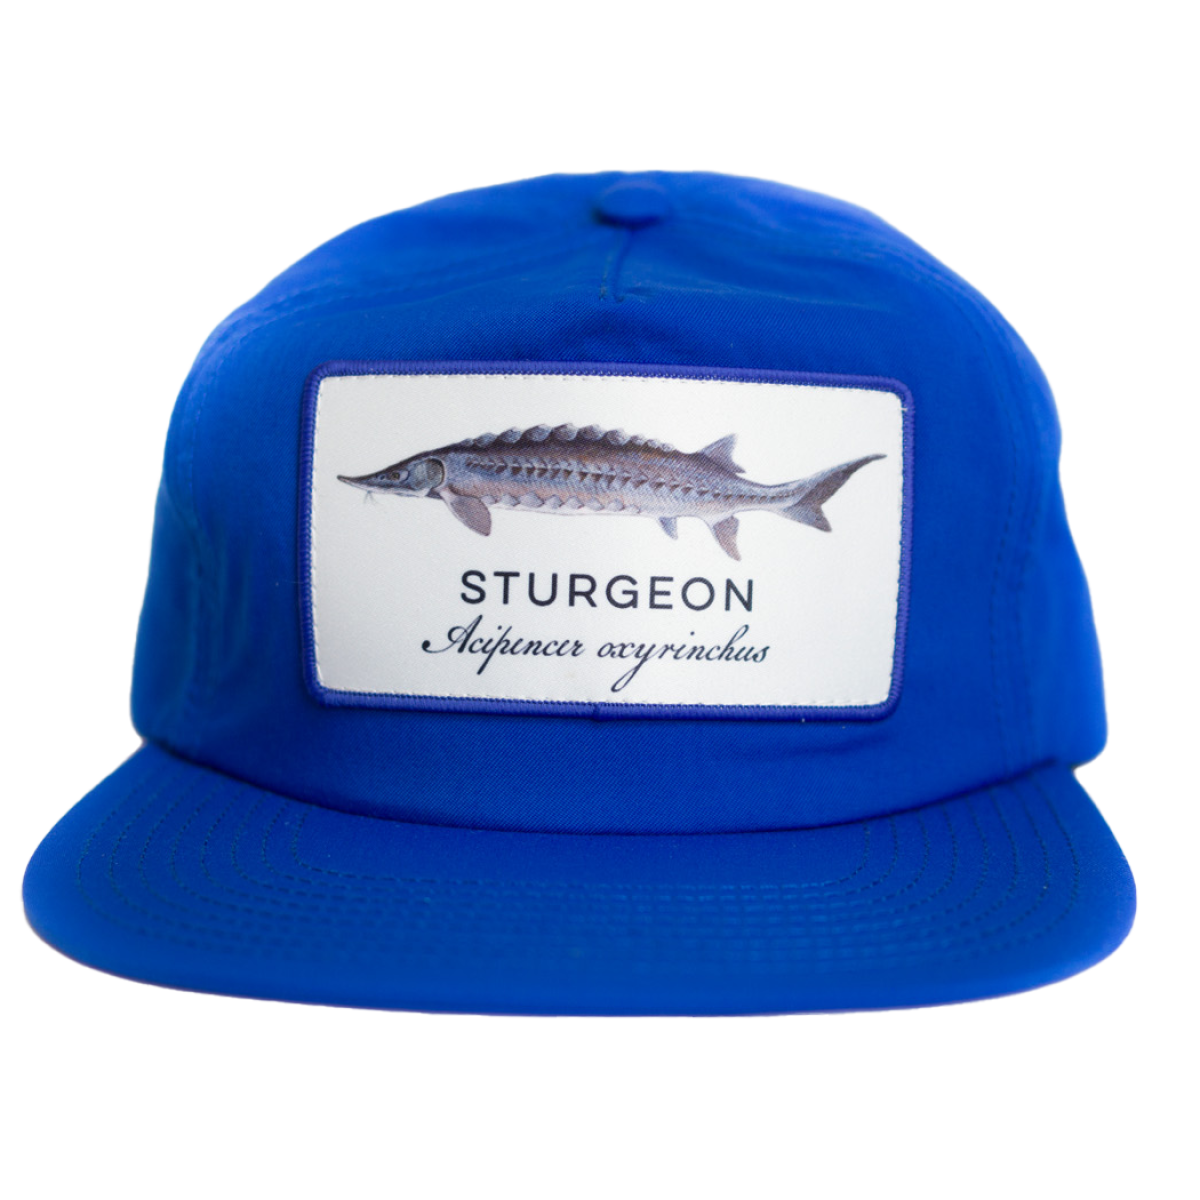 sturgeon_blue_003-1661372399.png